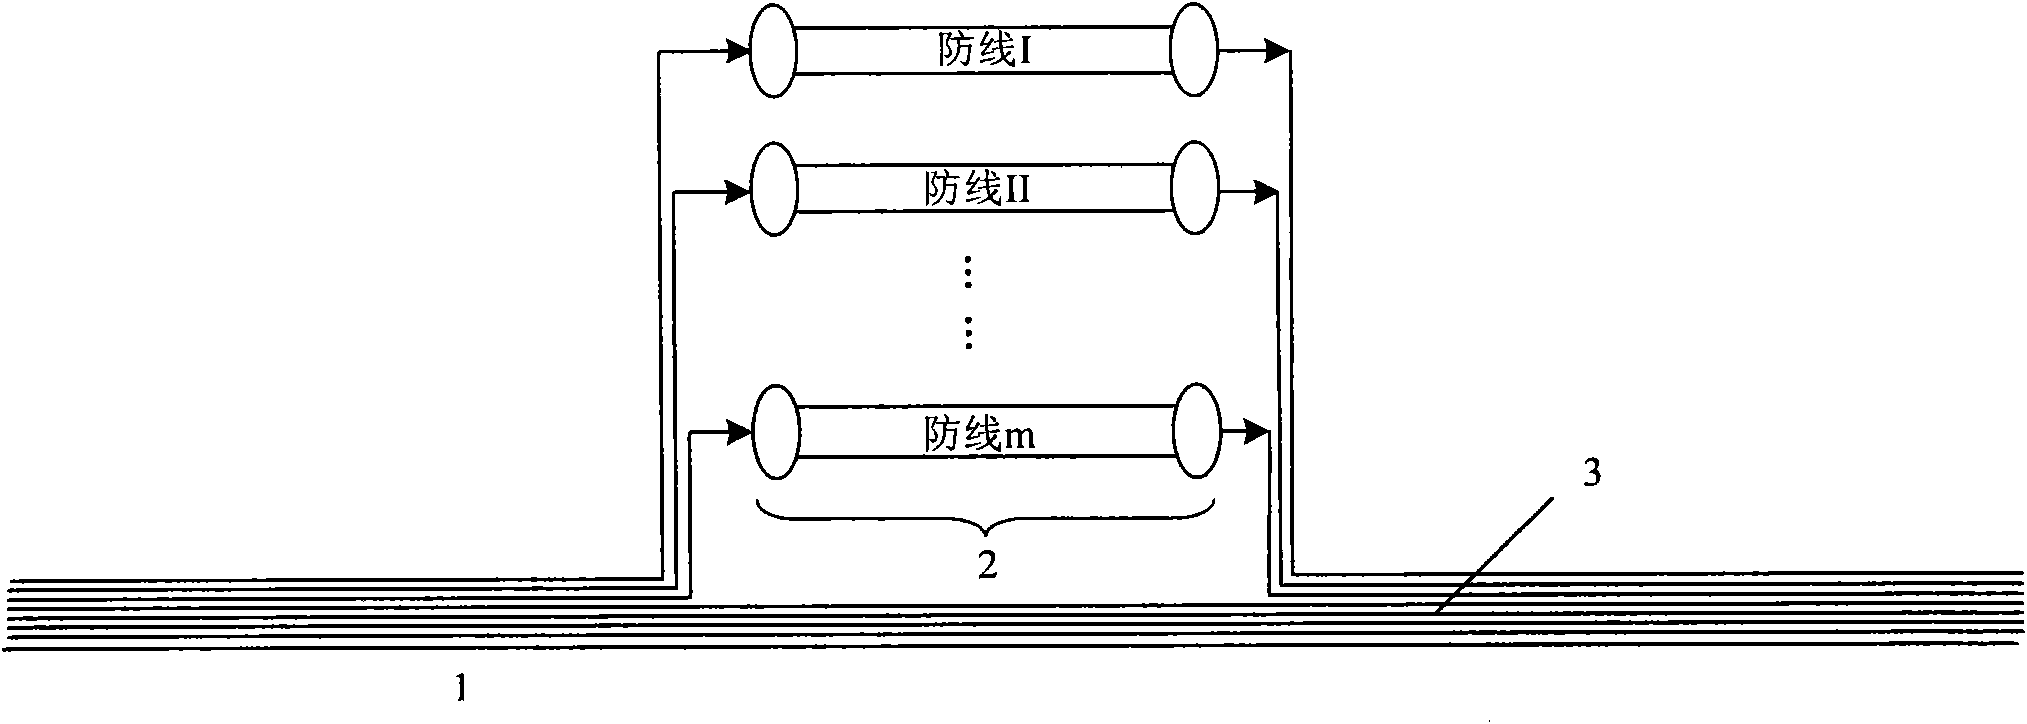 Fiber interferometer-based area anti-intrusion method